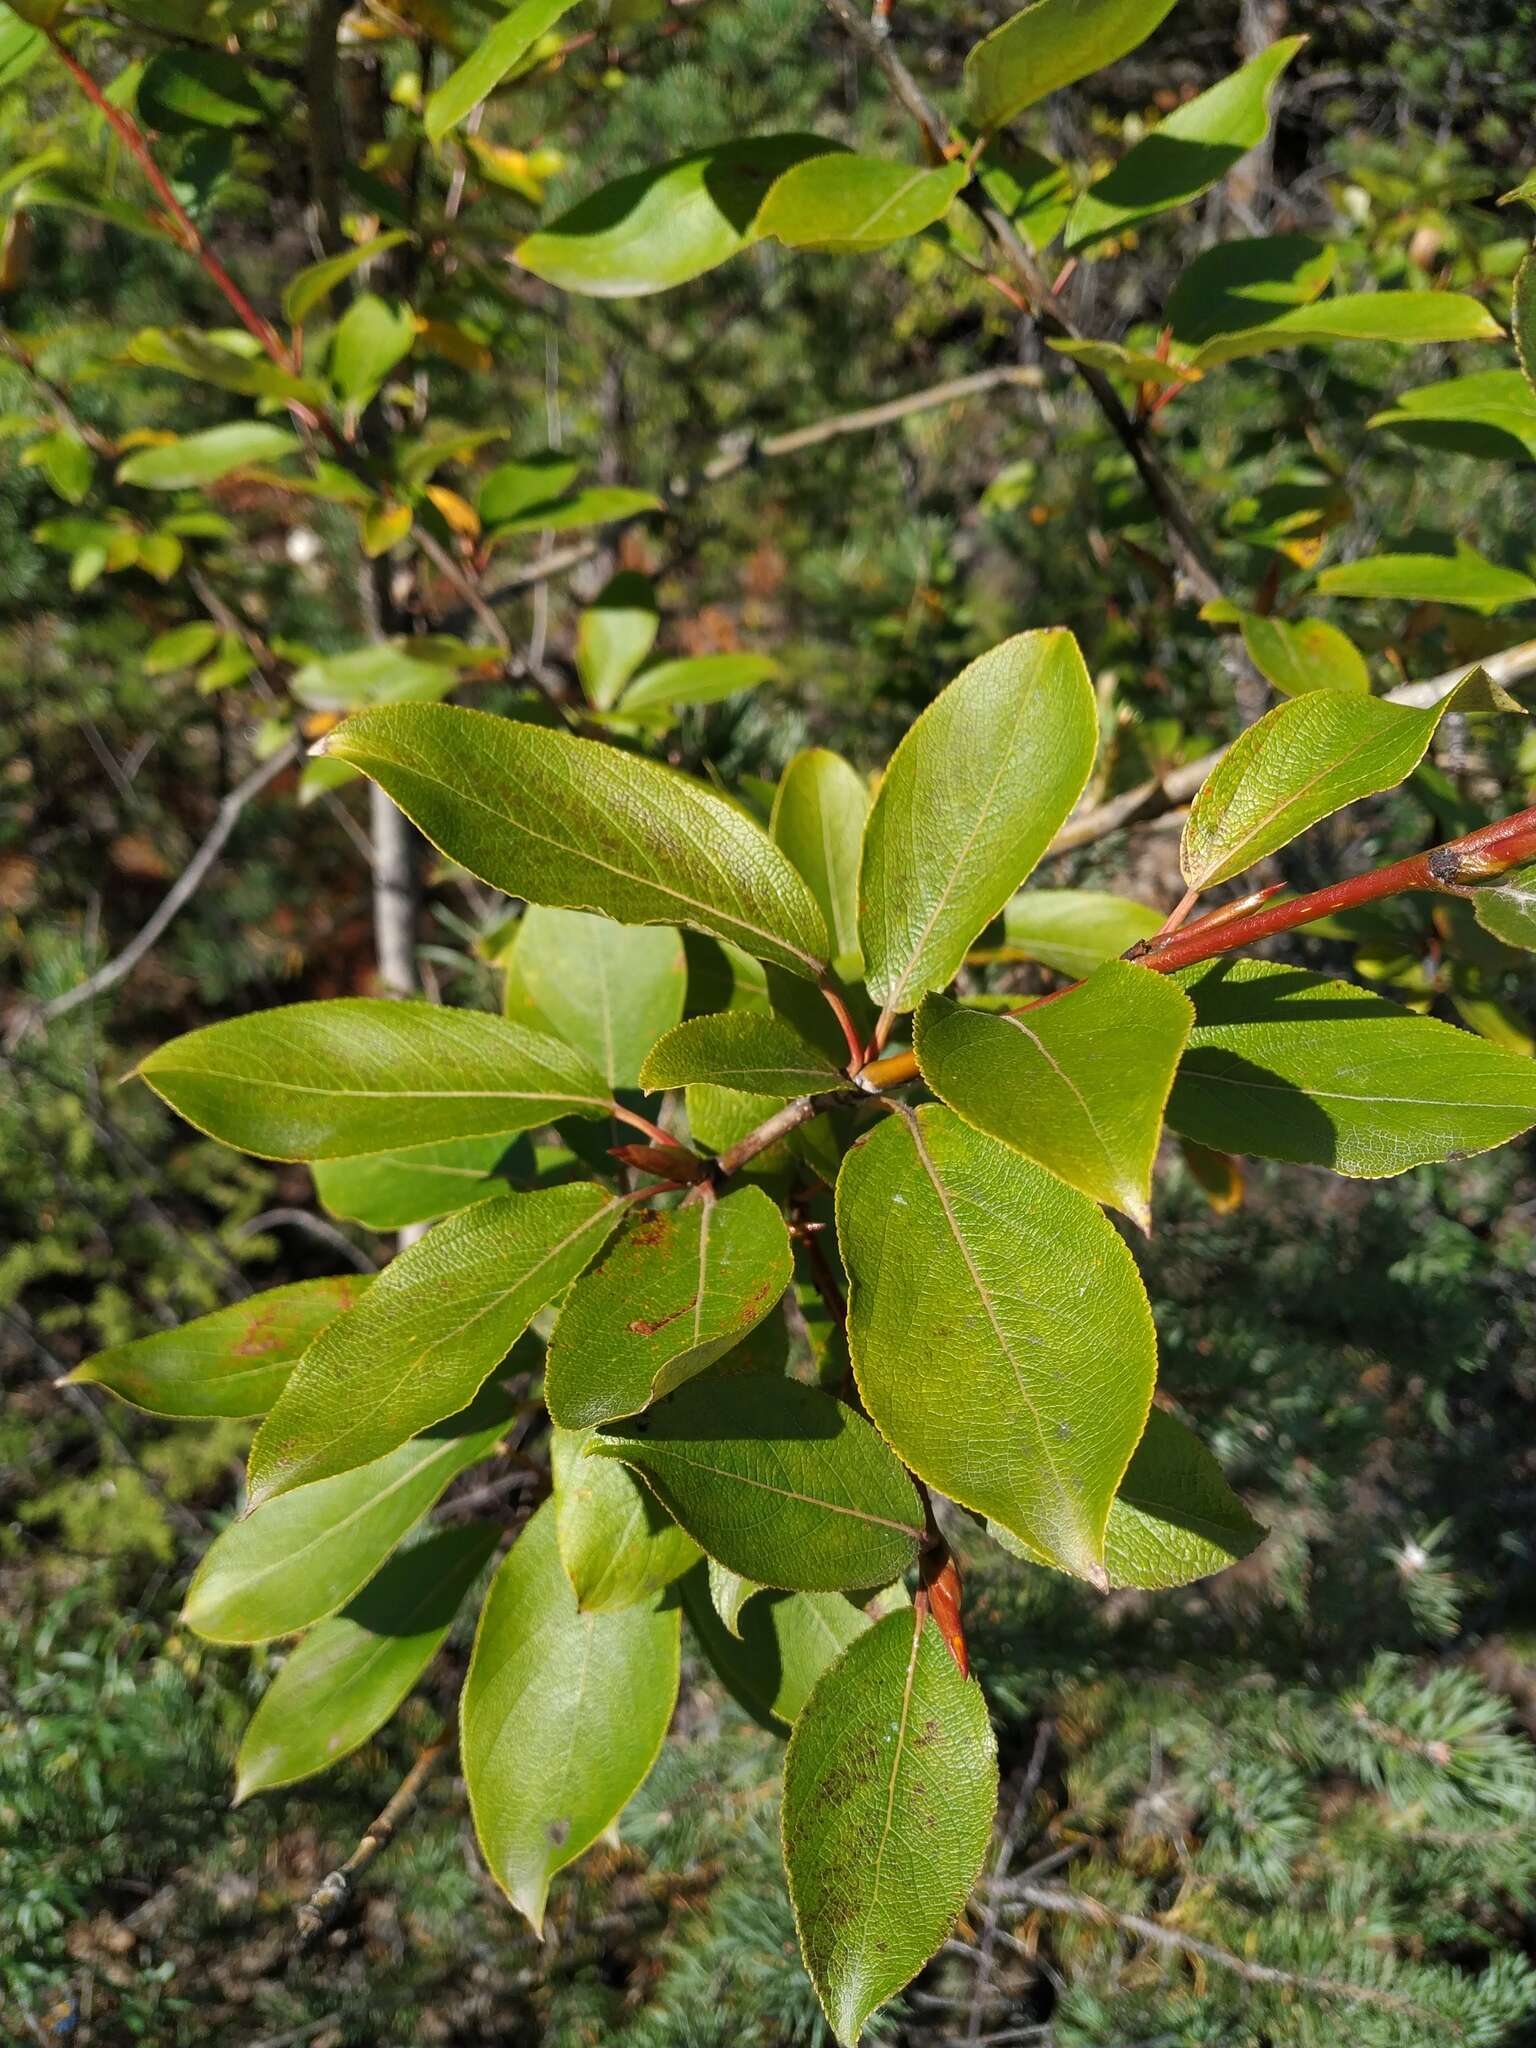 Image of Populus suaveolens subsp. baicalensis (Kom.) Egor. & Sipl.